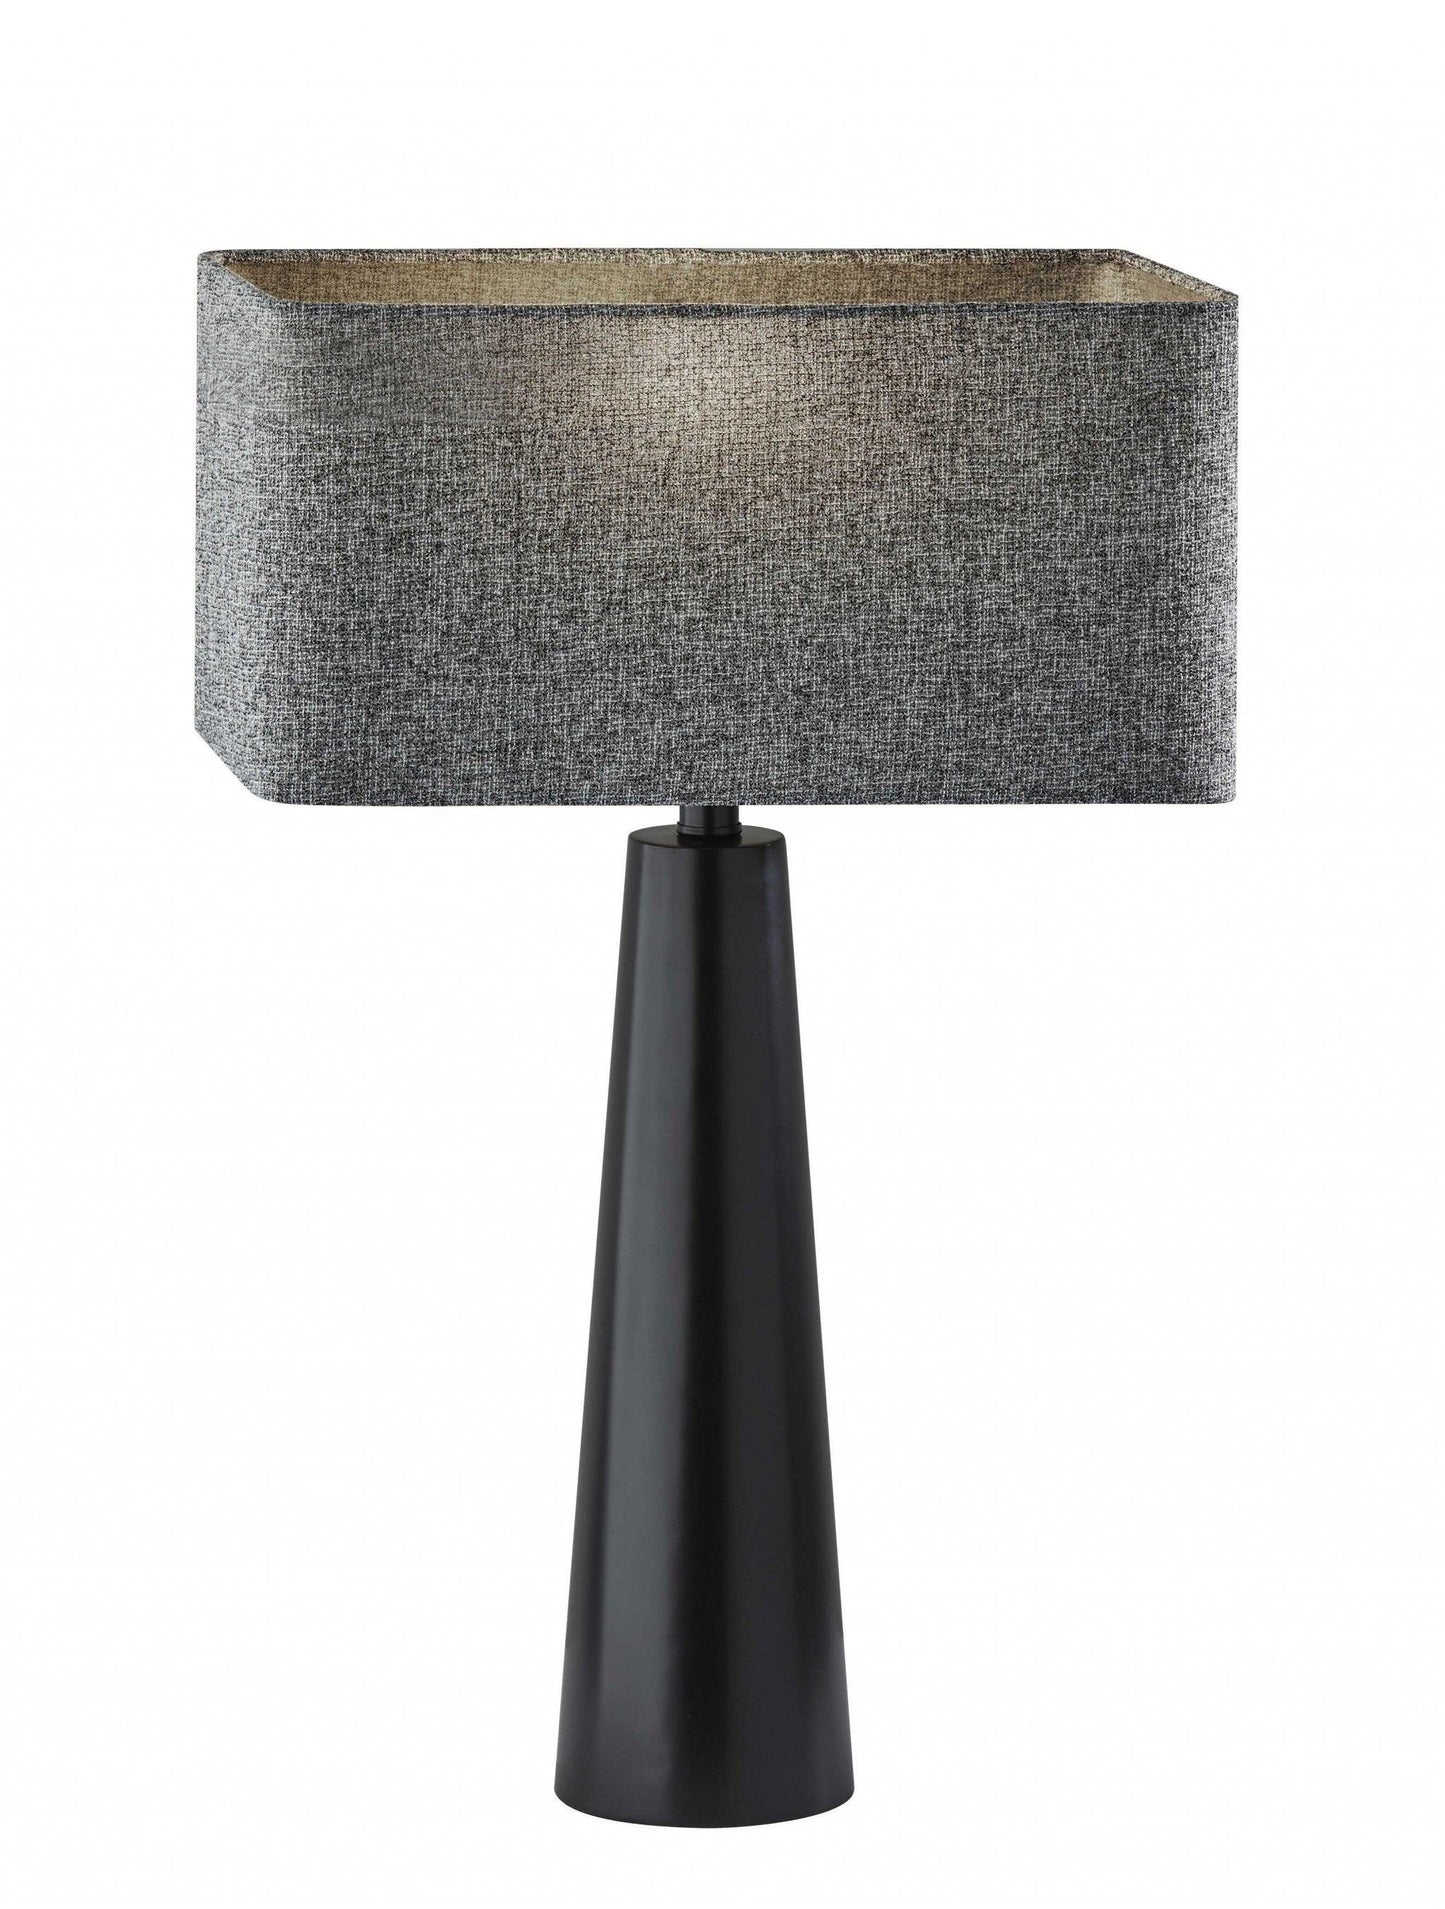 Urban Edge Black Metal Table Lamp - AFS